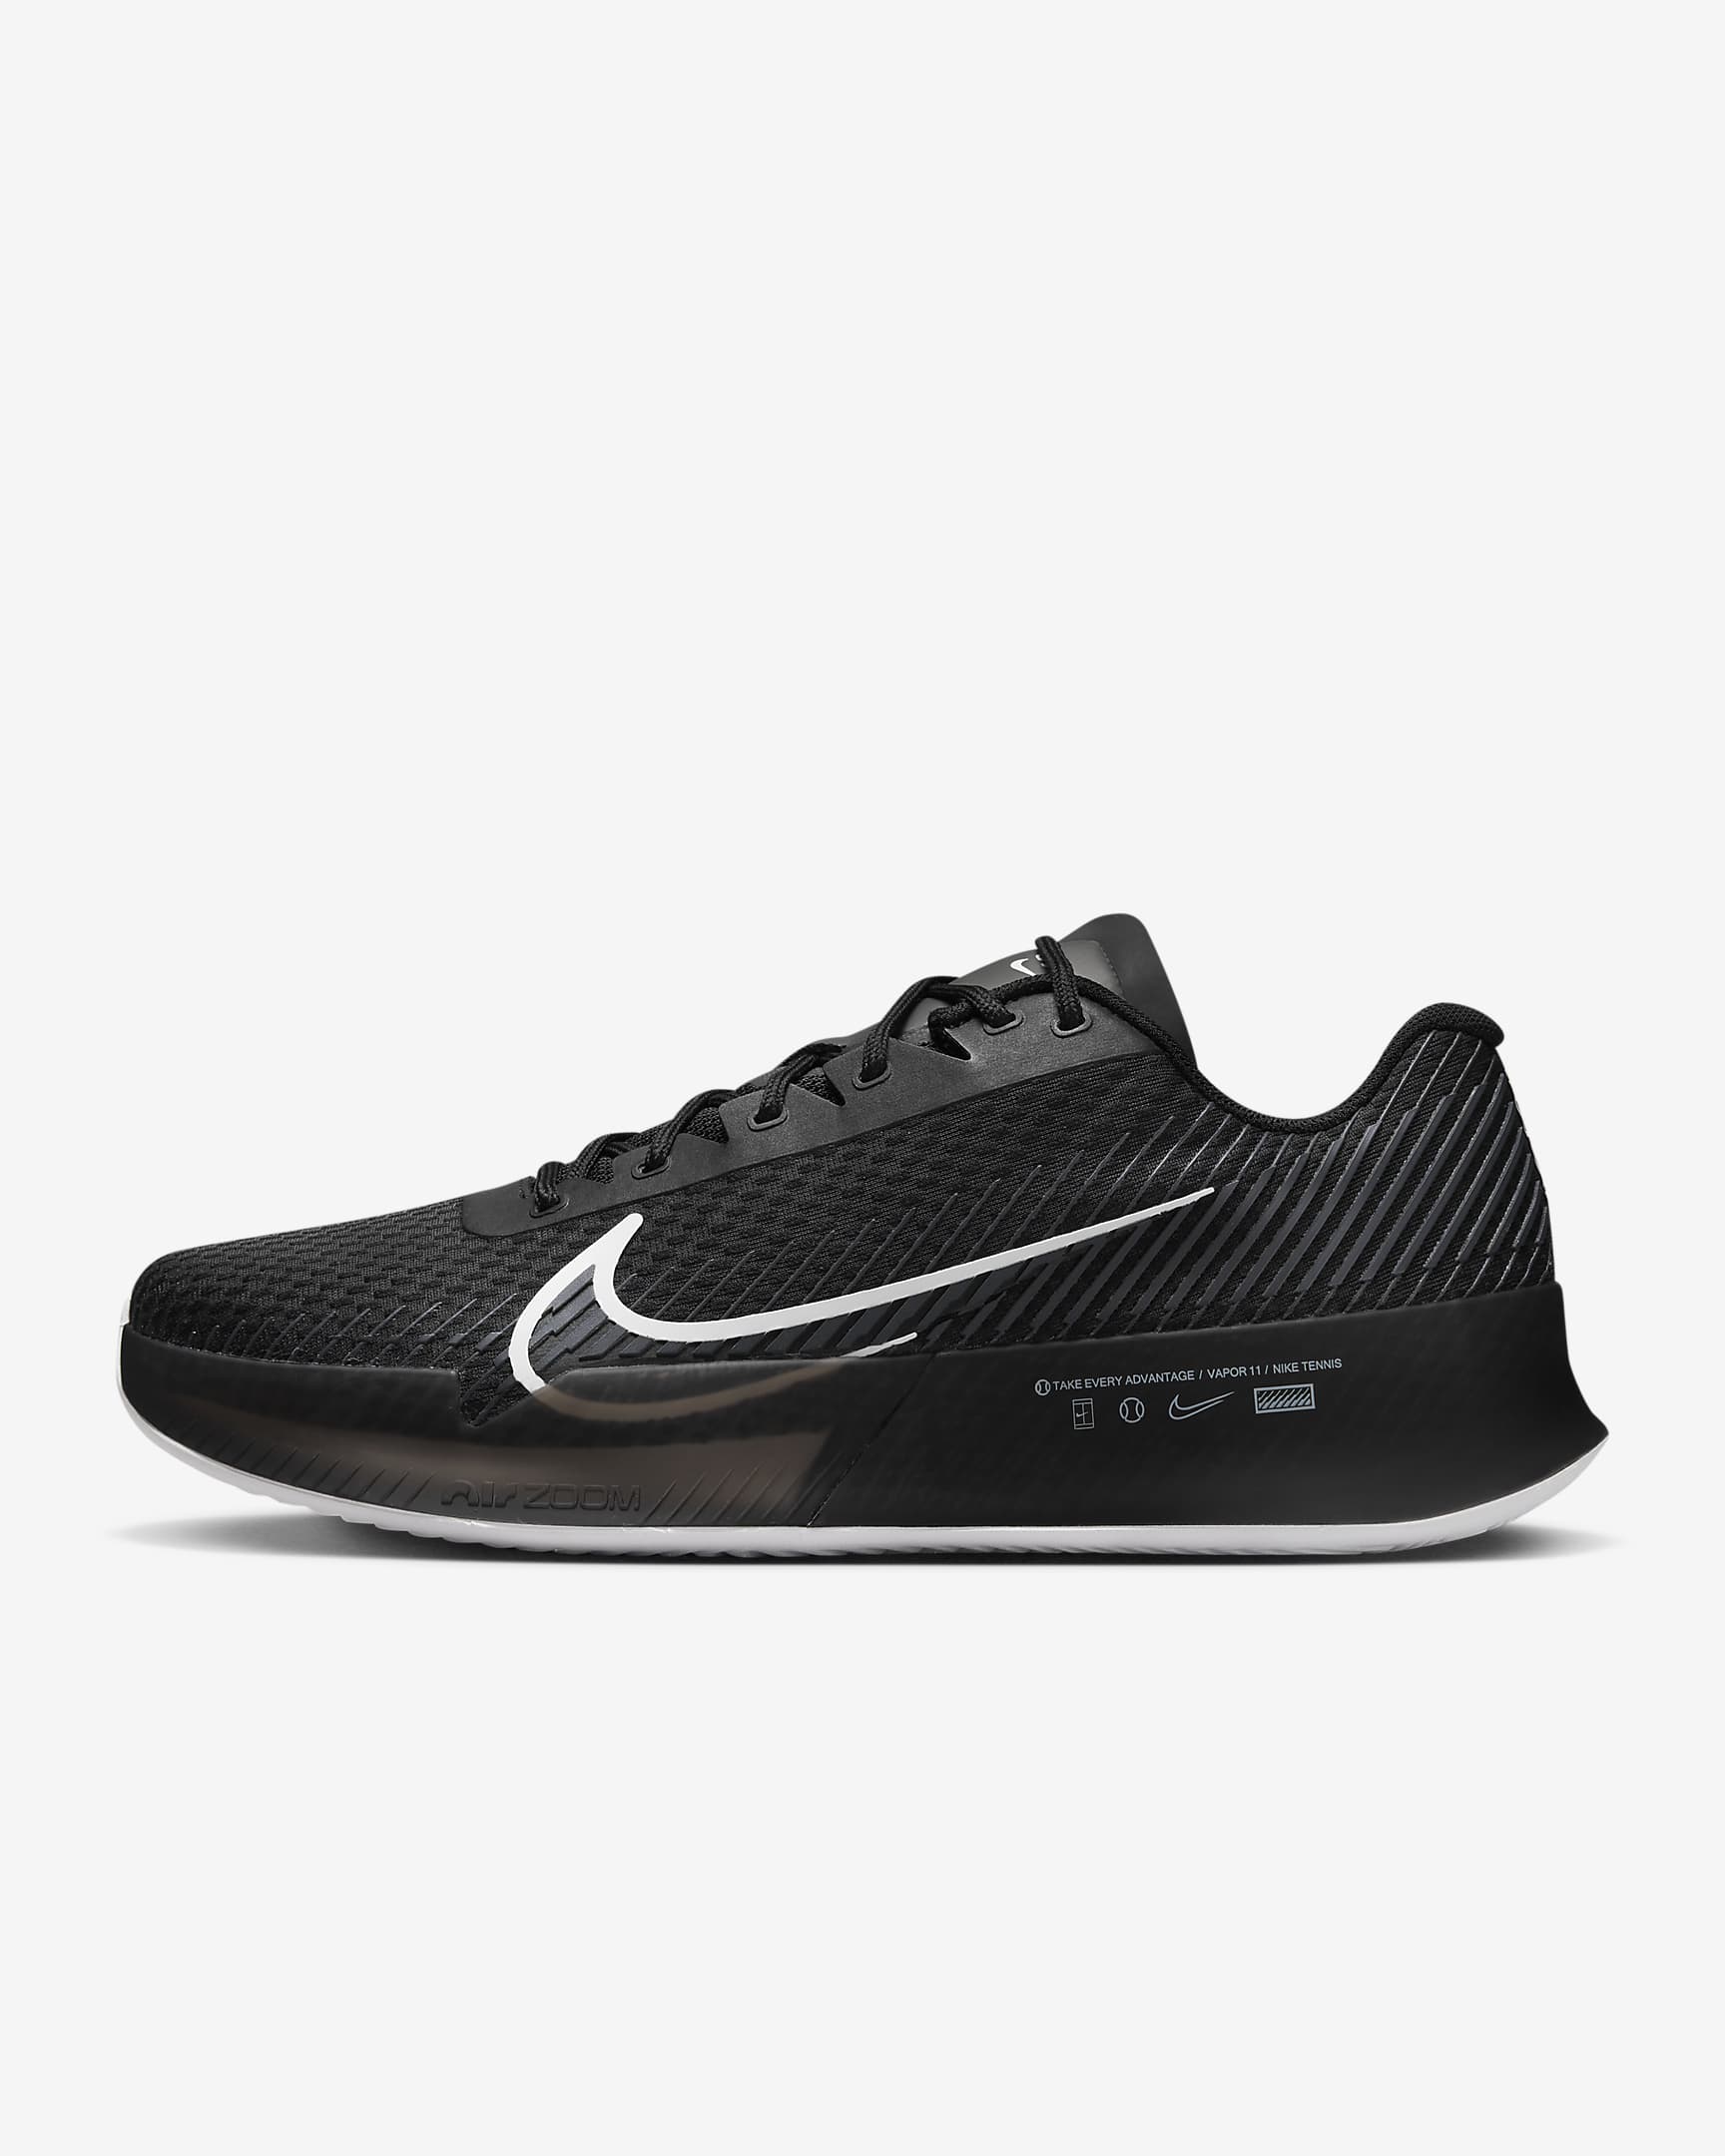 NikeCourt Air Zoom Vapor 11 Men's Clay Tennis Shoes. Nike HR